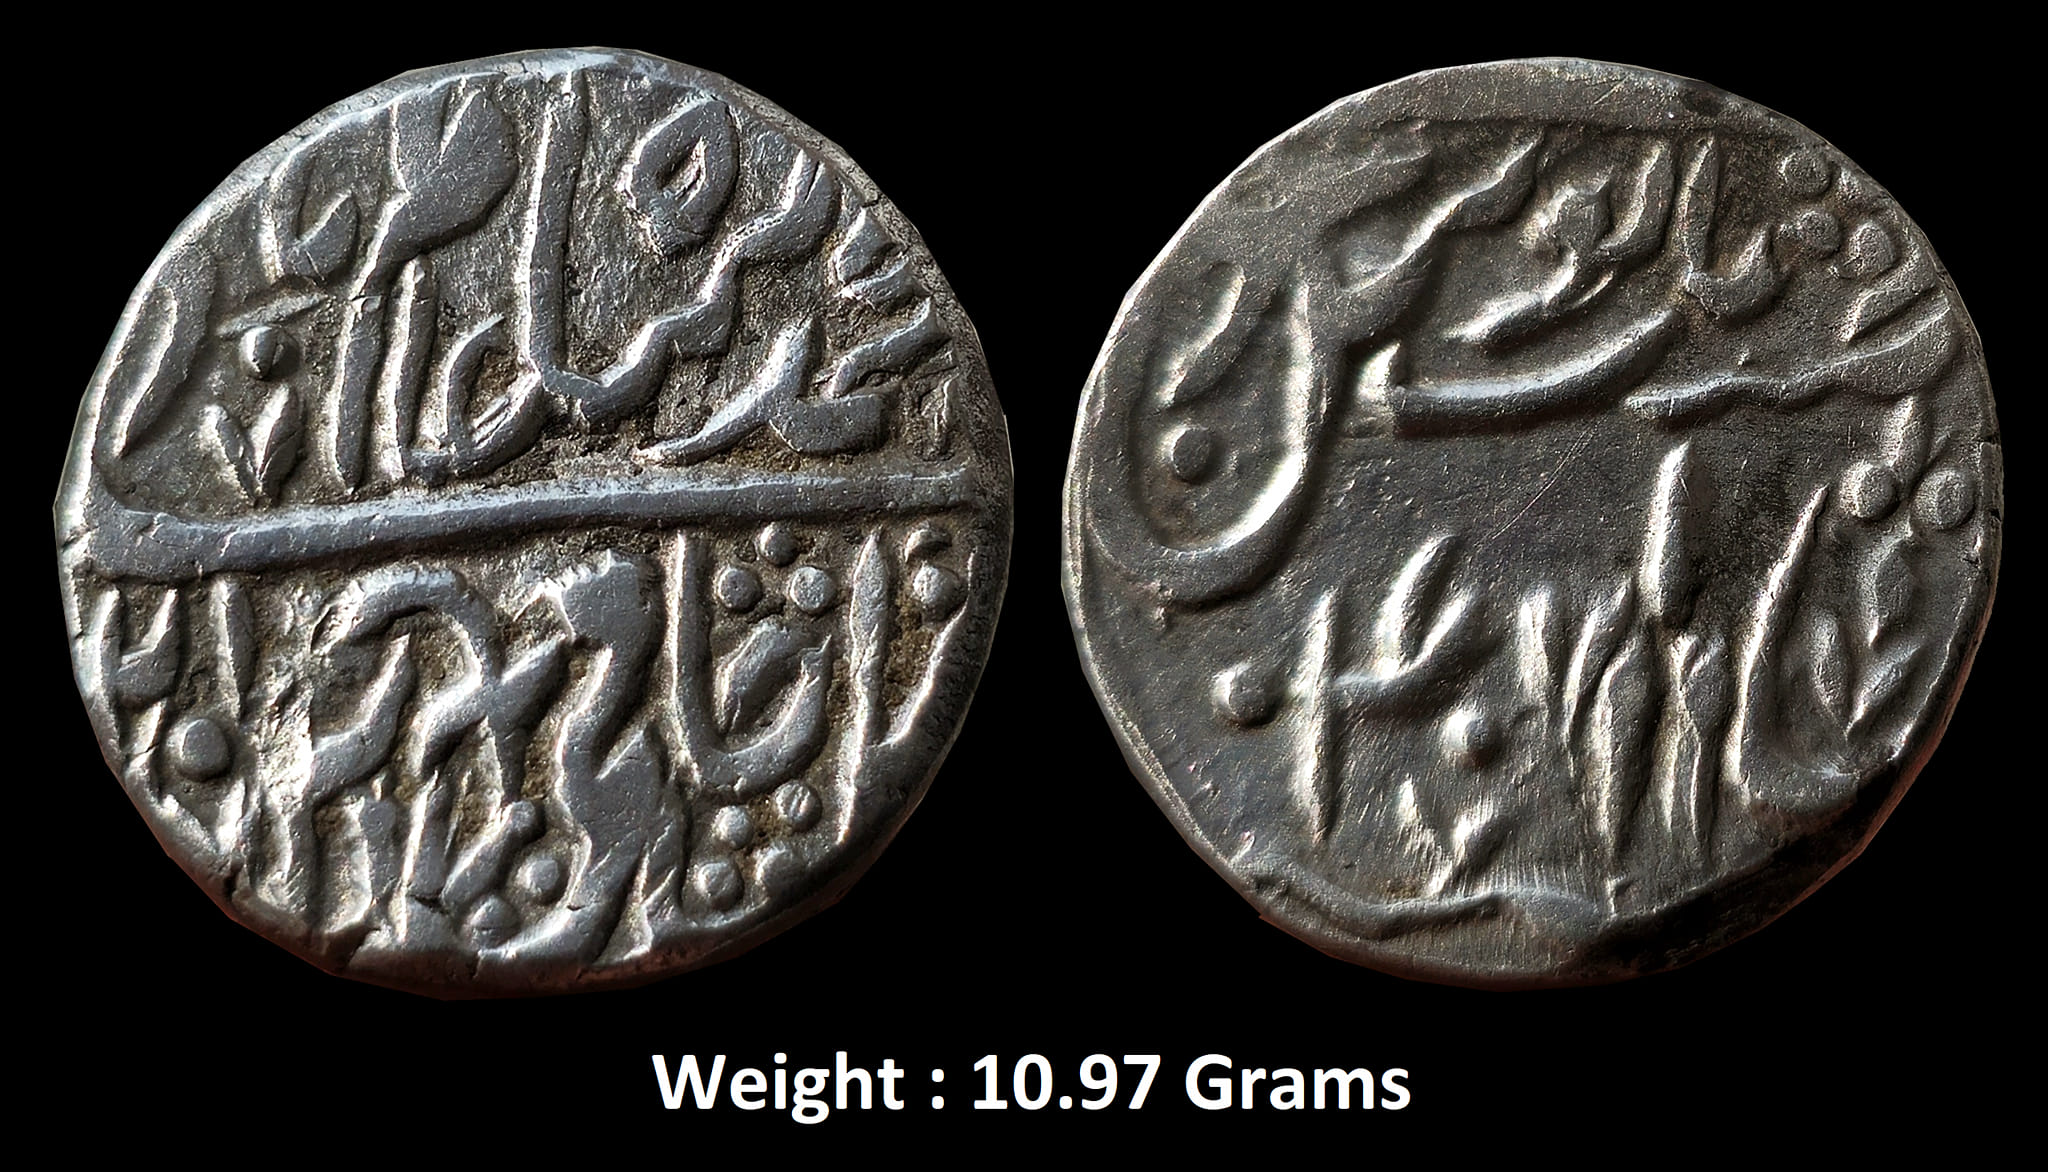 Independent Kingdoms - Sikh Empire
Sikh Feudatory, Bhai Rai Singh, Silver Rupee,
Mint : Jagadhari Mint, Pseudo mint name Najibabad, in the name of Shah Alam II, RY 40
(Numismatic Digest 37, KM 132).